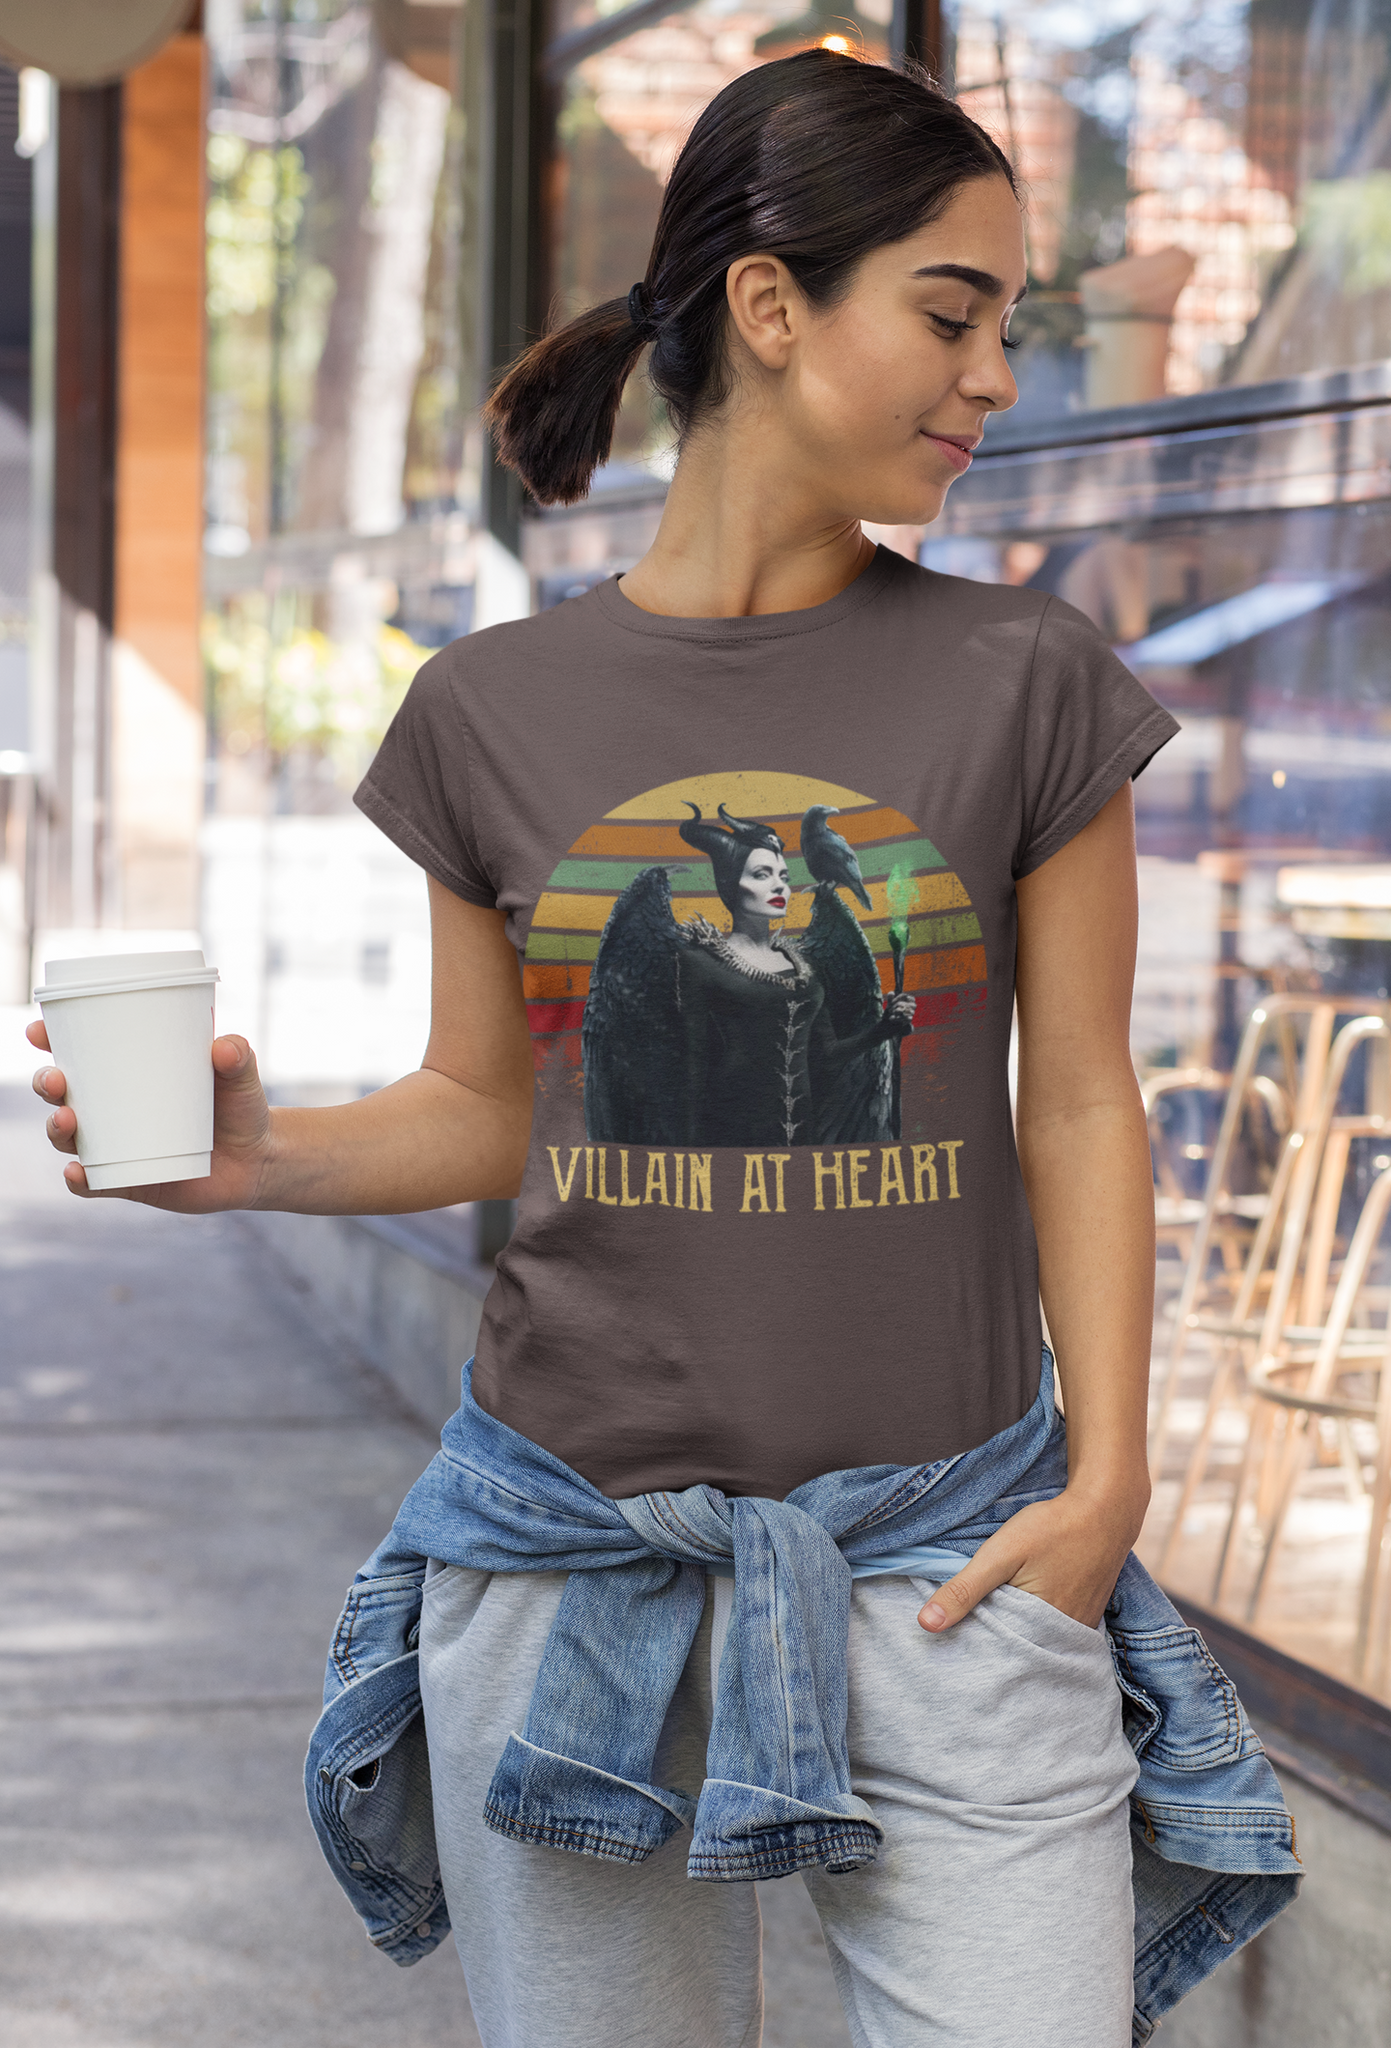 Disney Maleficent Vintage T Shirt, Disney Villains T Shirt, Villain At Heart Tshirt